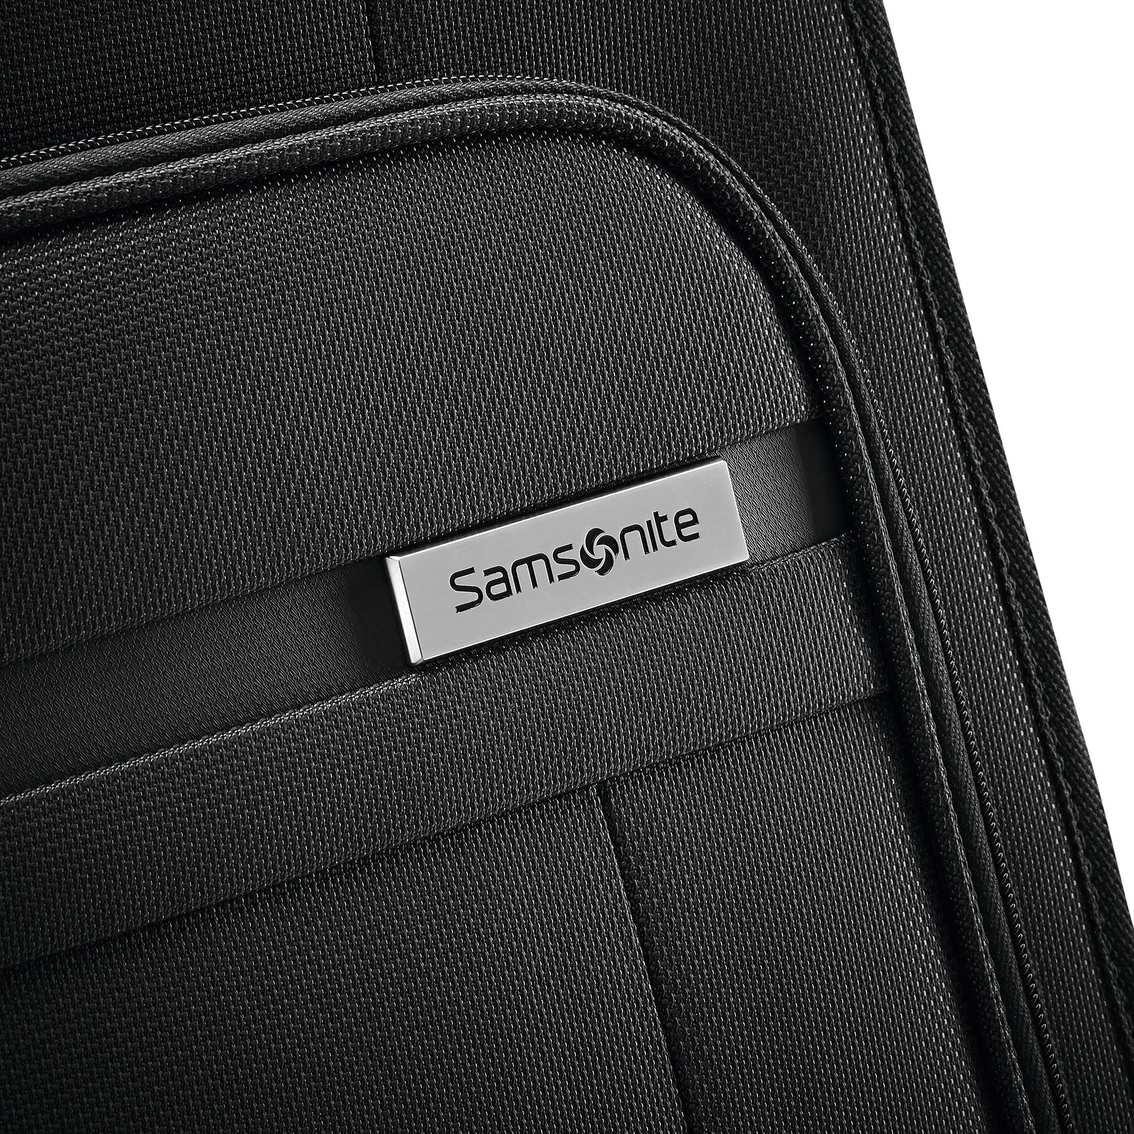 Samsonite Insignis Garment Bag | Luggage | Clothing & Accessories ...